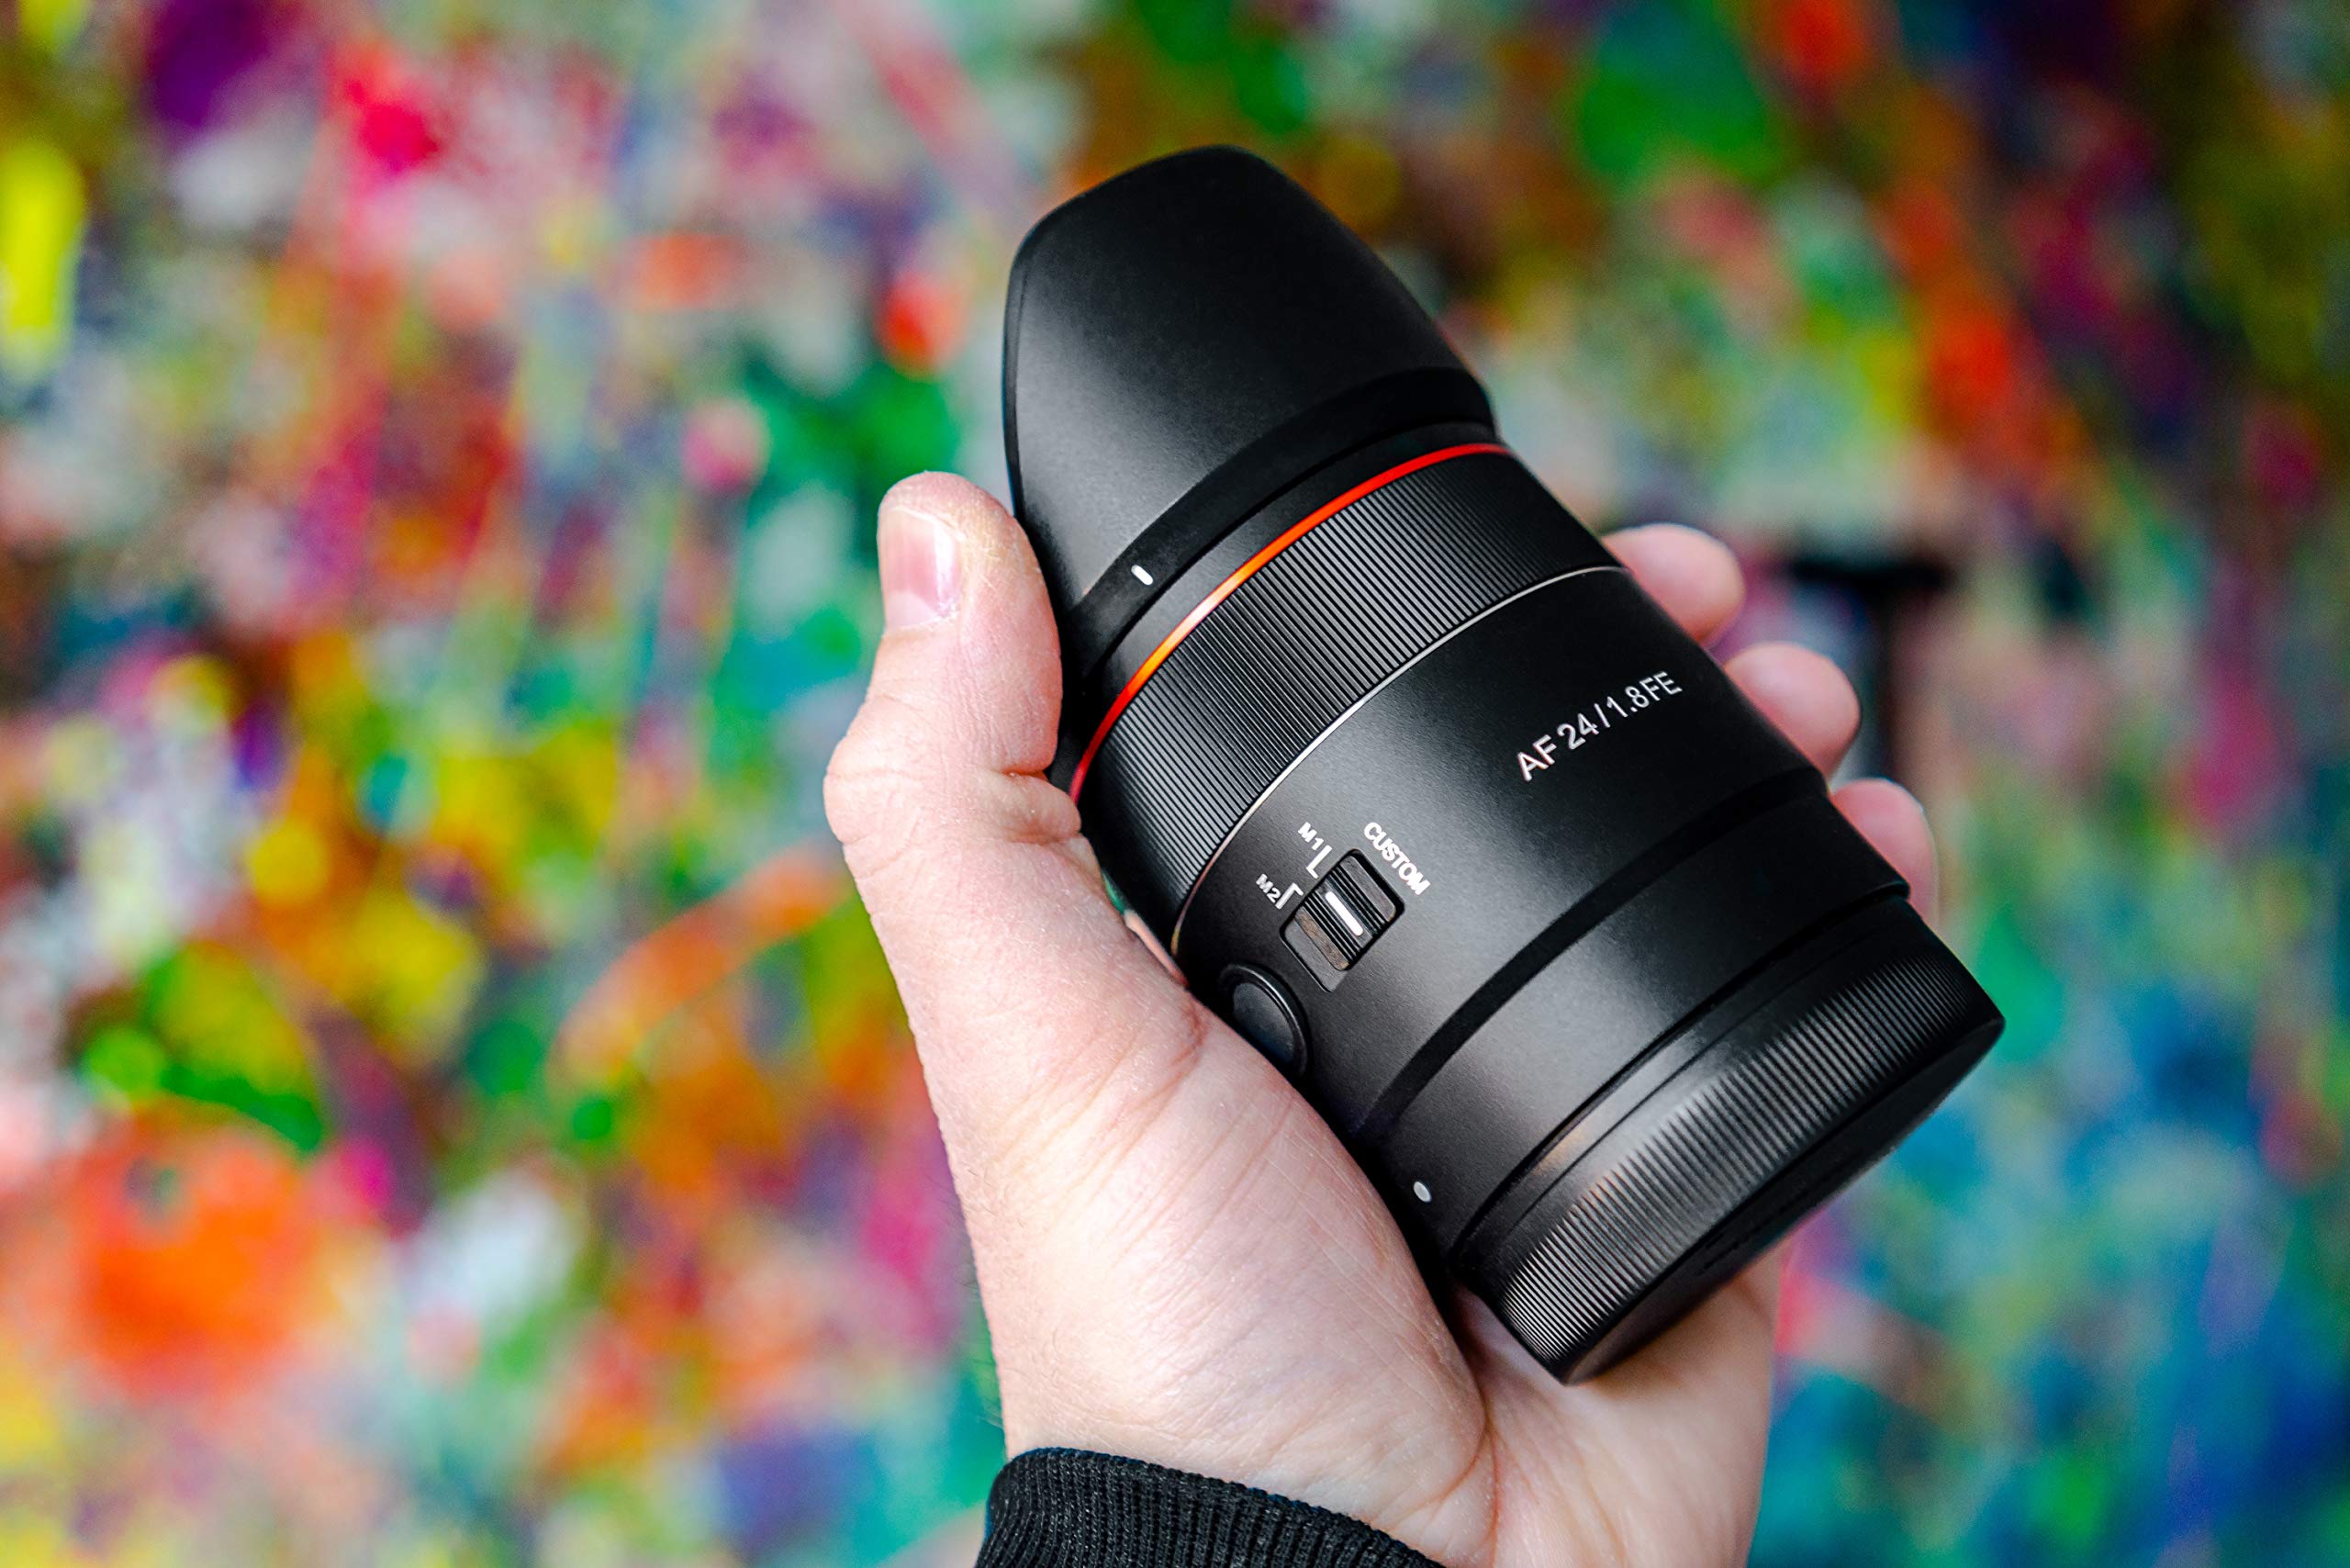 Rokinon 24mm F1.8 AF Compact Full Frame Wide Angle Auto Focus Lens for Sony E (IO2418-E)